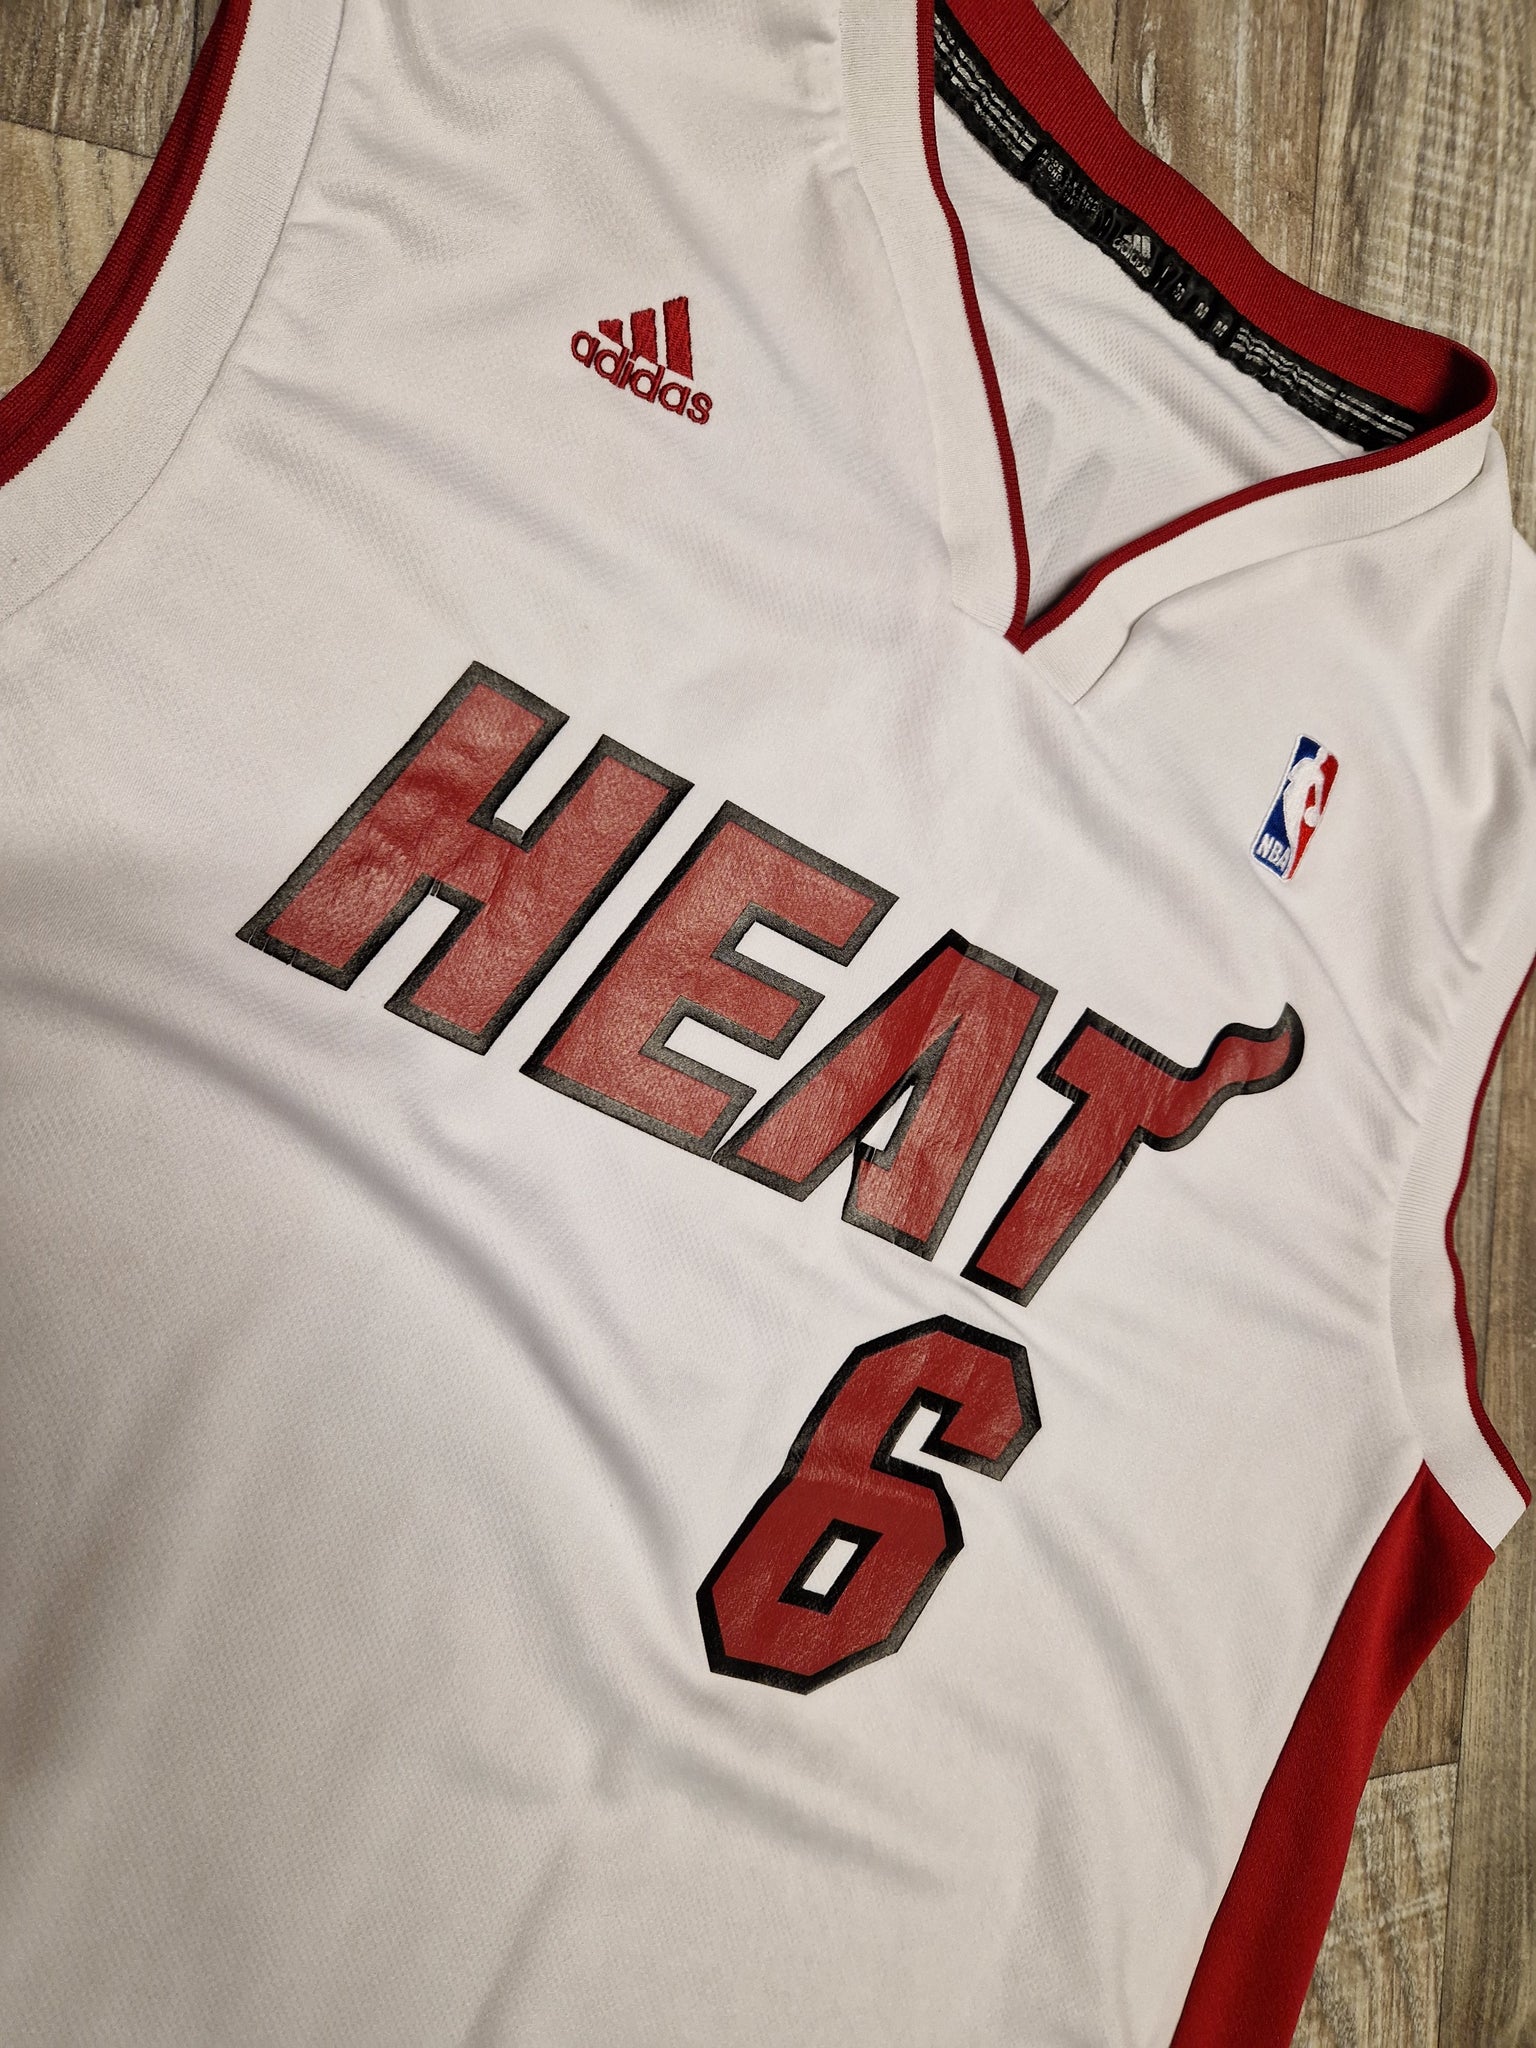 Adidas NBA Miami Heat Lebron James Youth Medium Replica Basketball Jersey